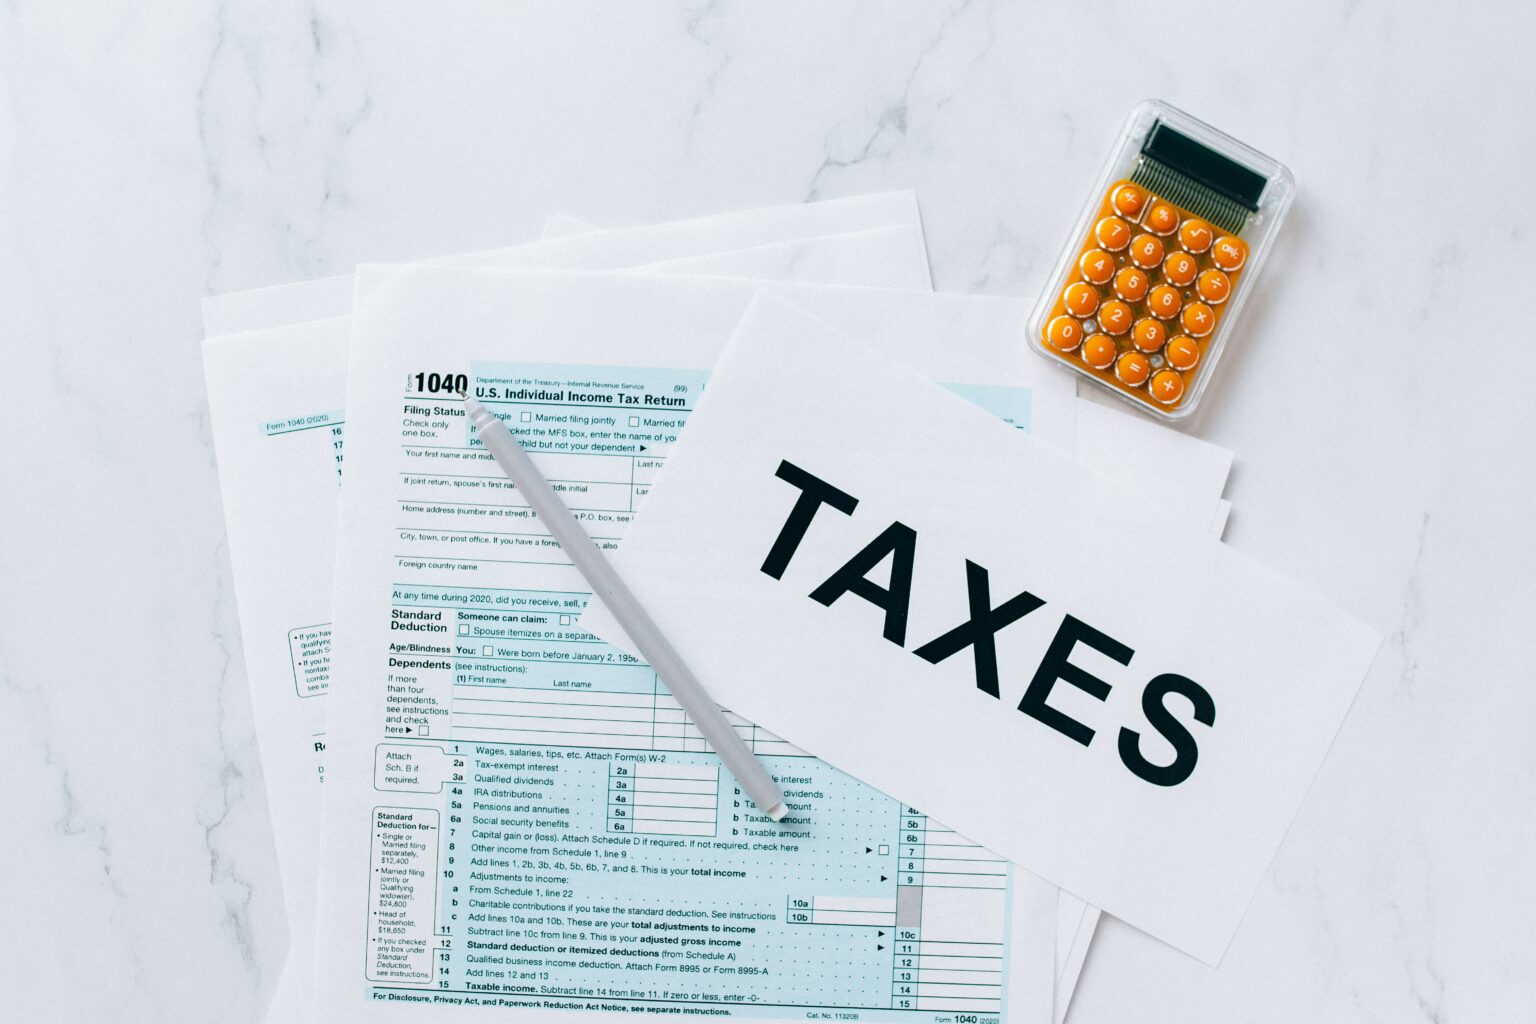 Mesa de mármore com formulários de imposto de renda nos EUA, caneta, calculadora e folha escrito "Taxes"